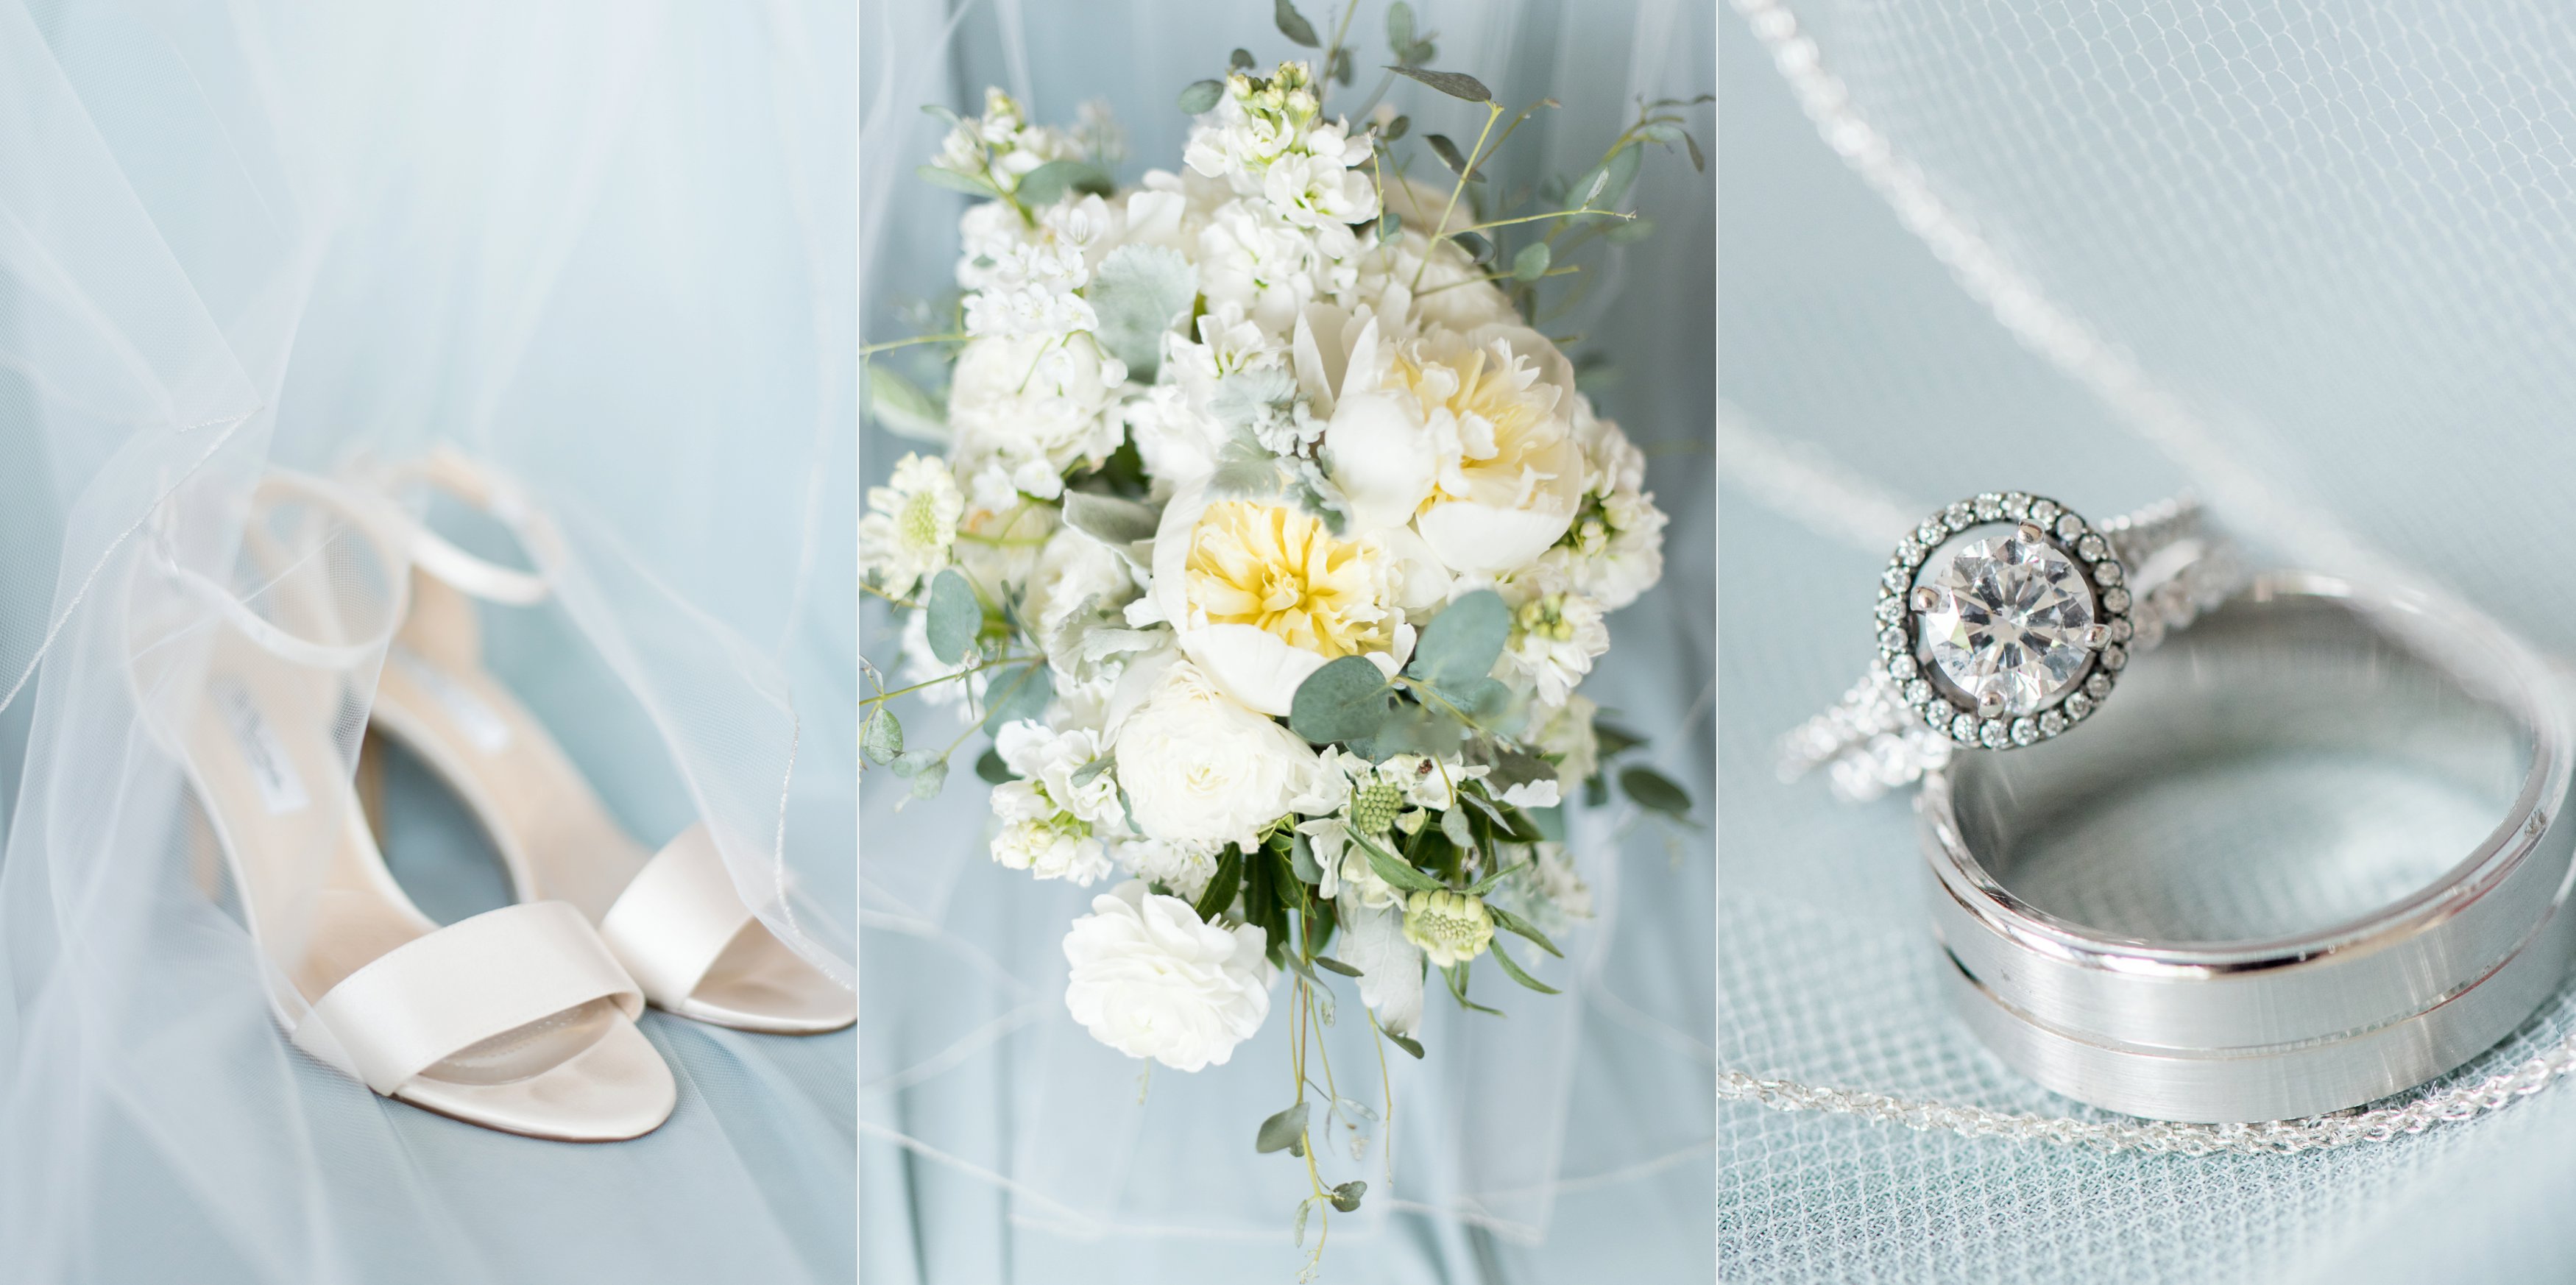 Sarah & Rachel | Wedding Photographers, Pale blue, blush, and white wedding